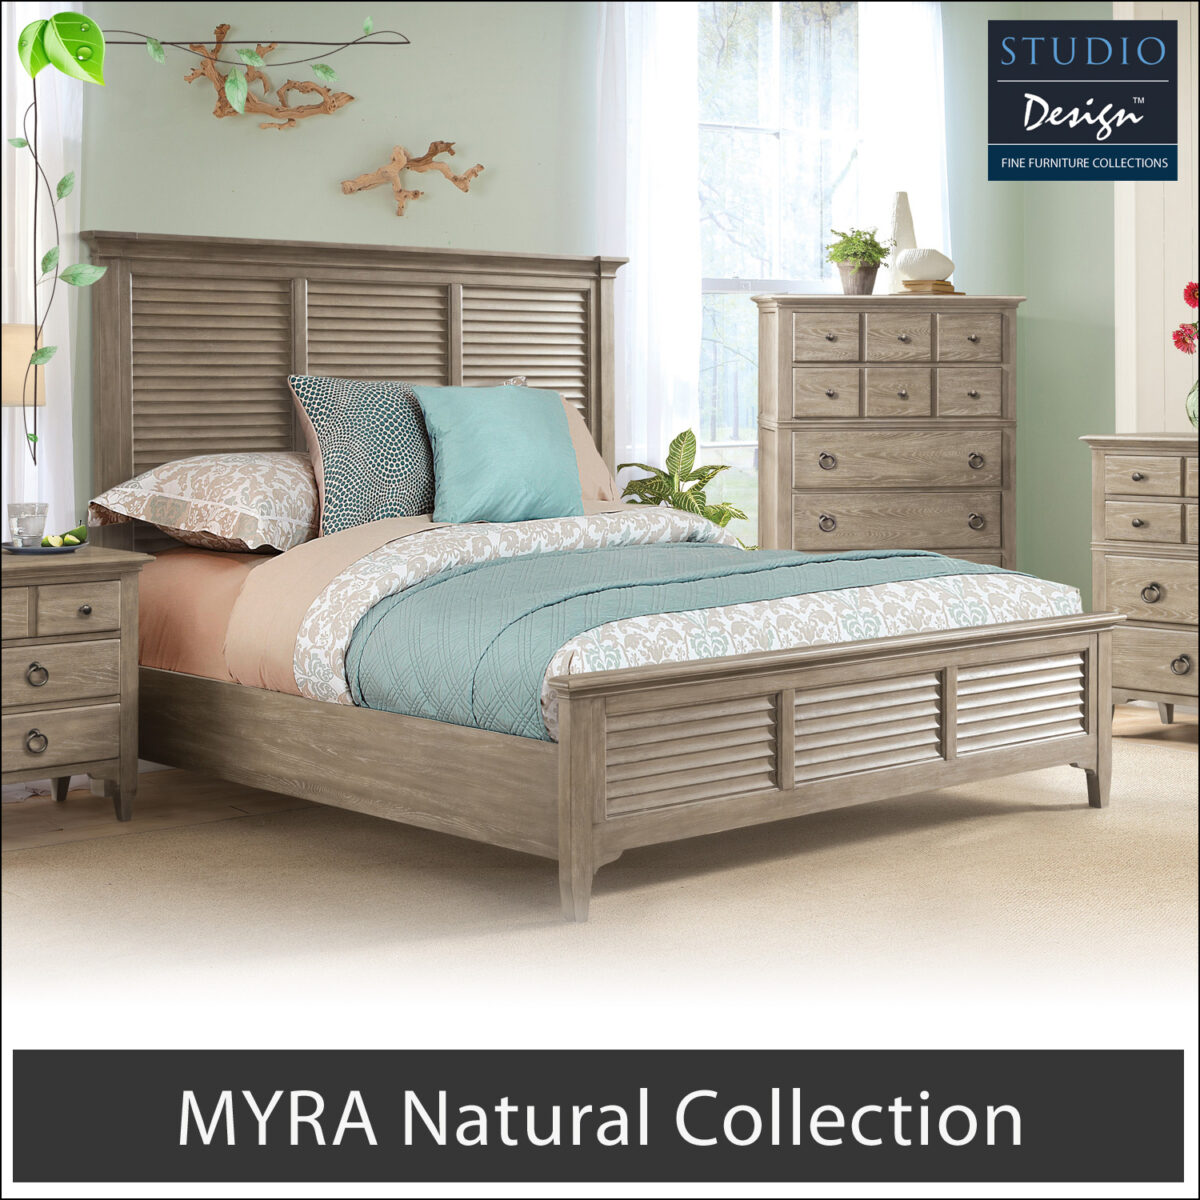 Myra Natural Collection